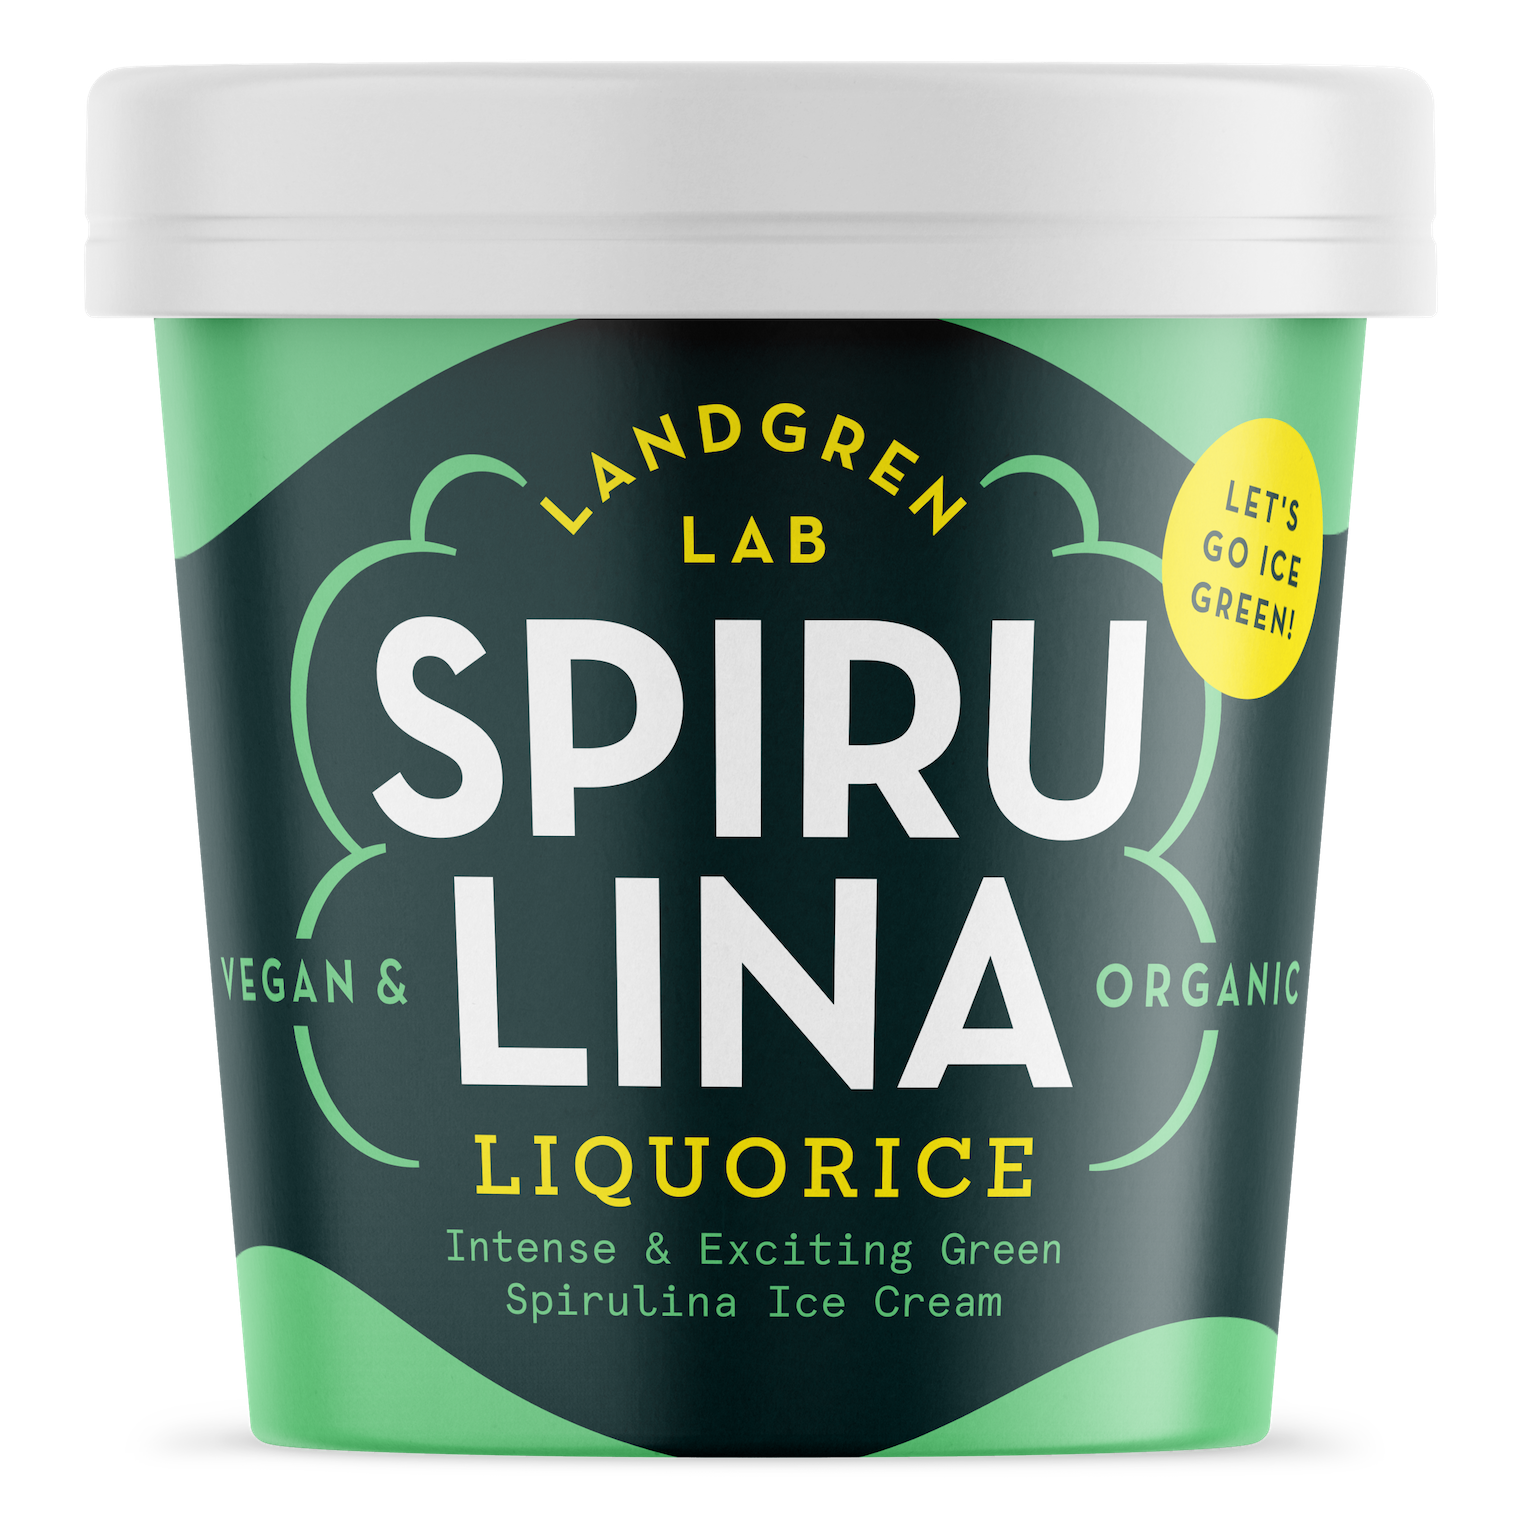 Landgren Lab - Spirulina Liquorice